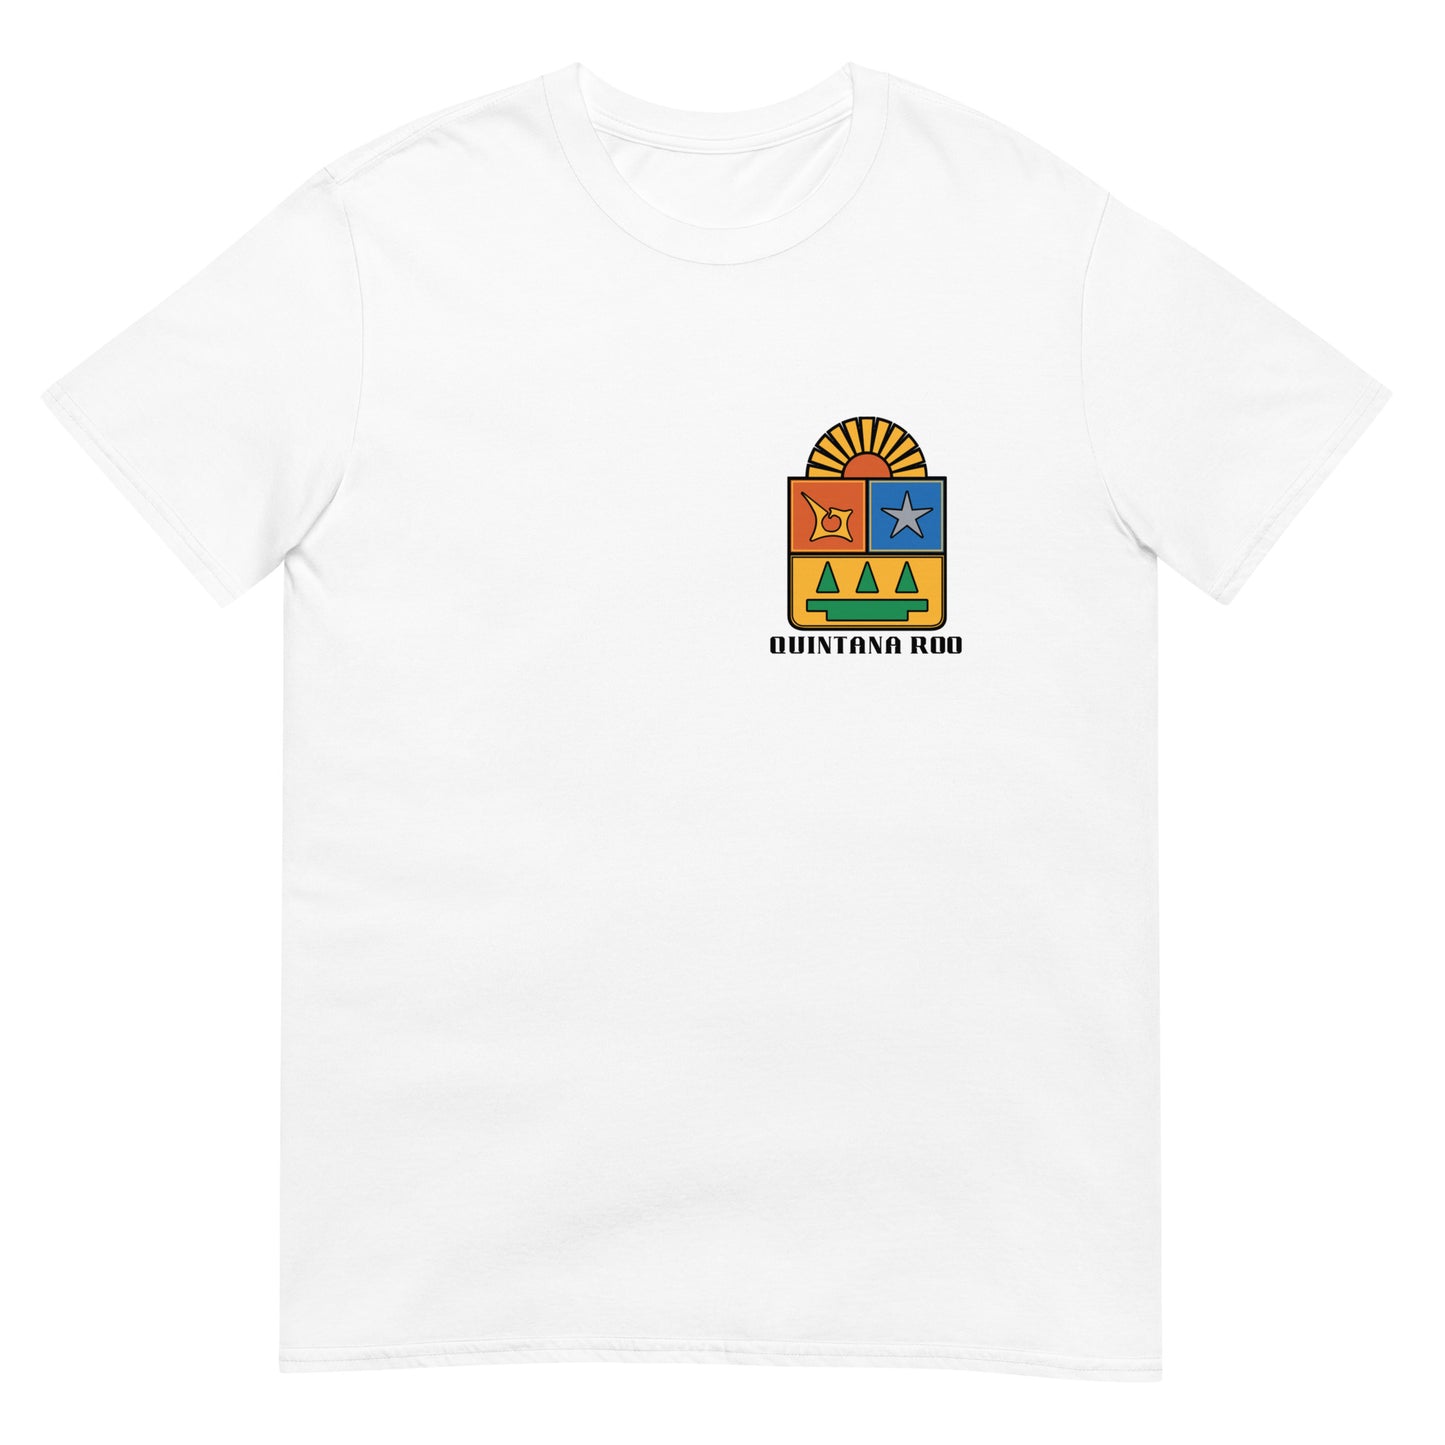 Quintana Roo- T-Shirt